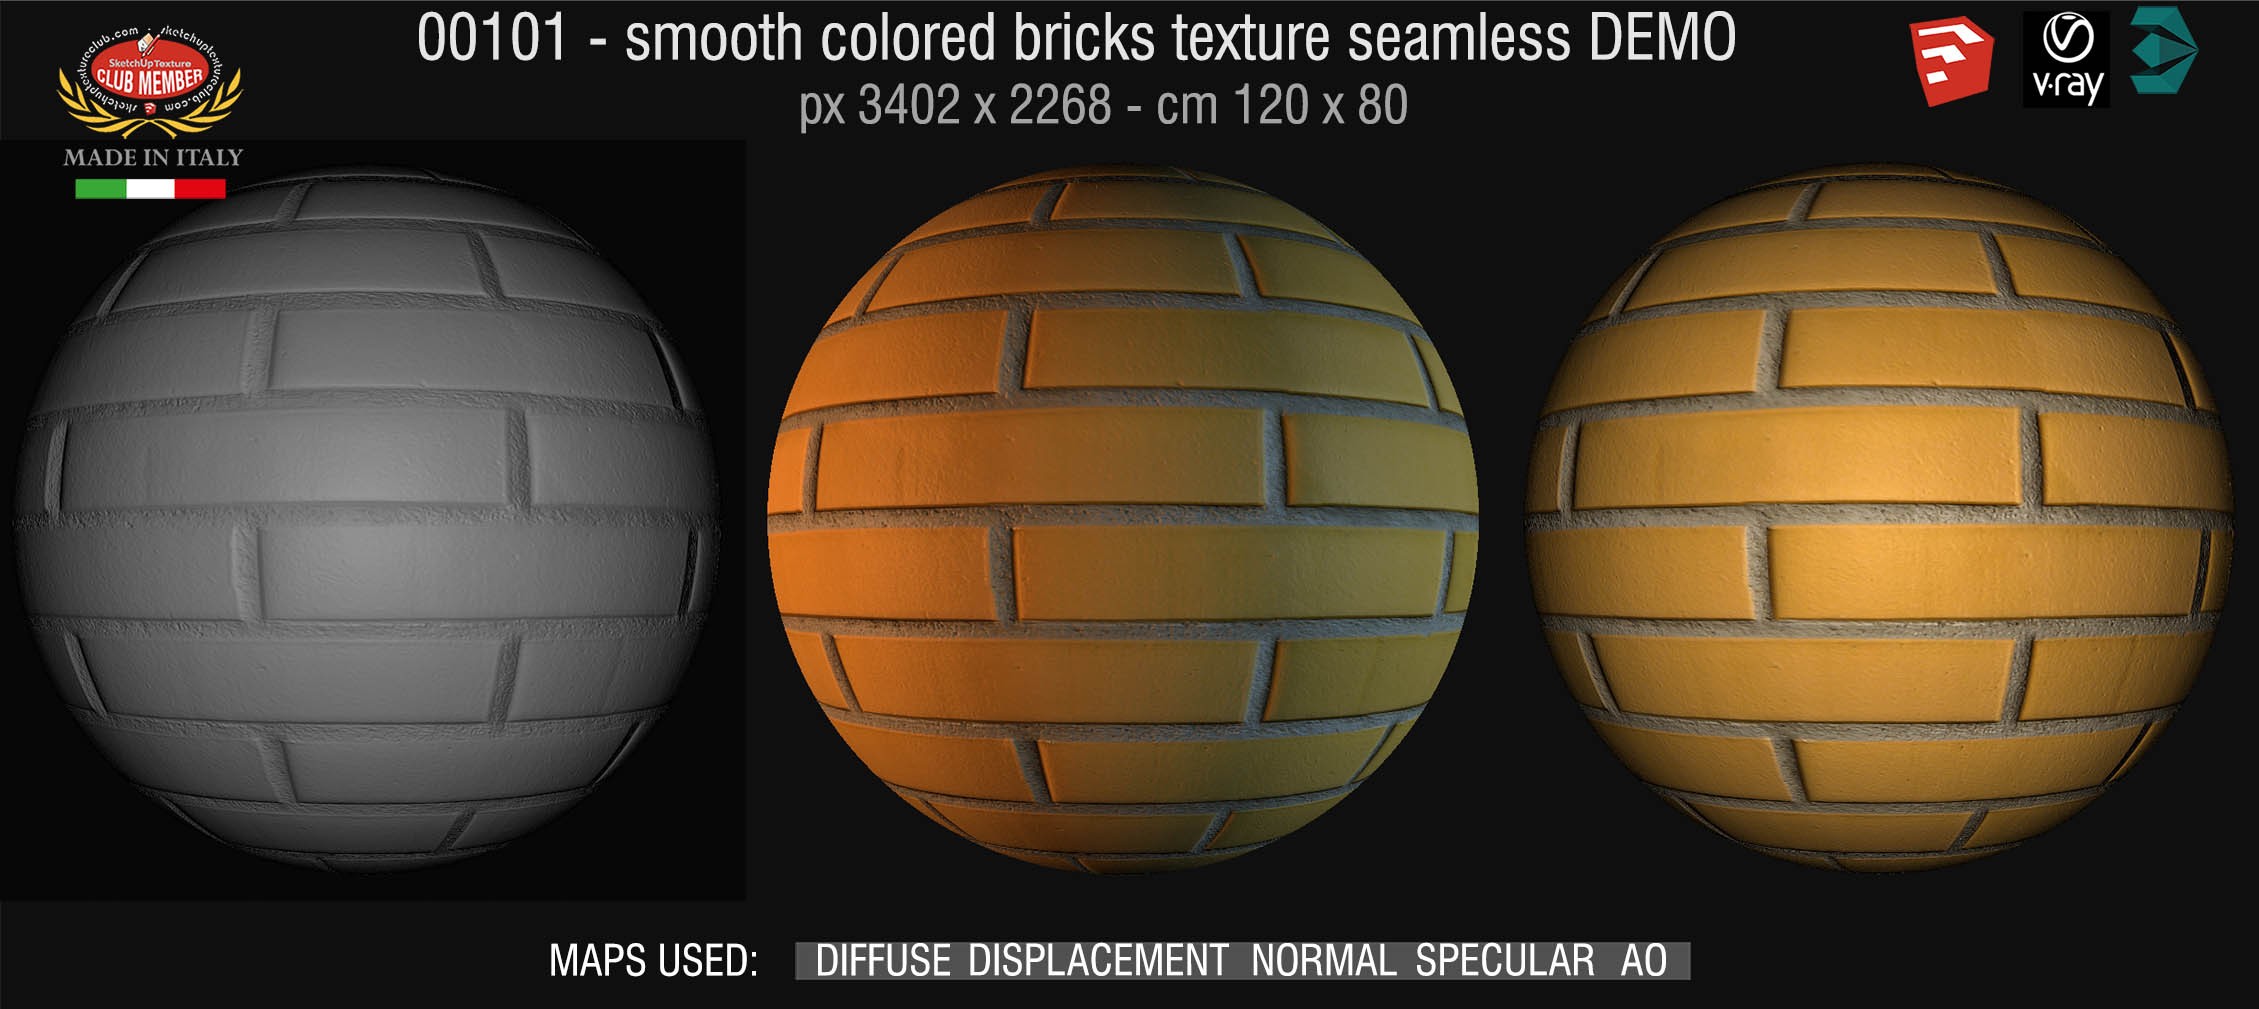 00101 smooth colored bricks texture seamless + maps DEMO